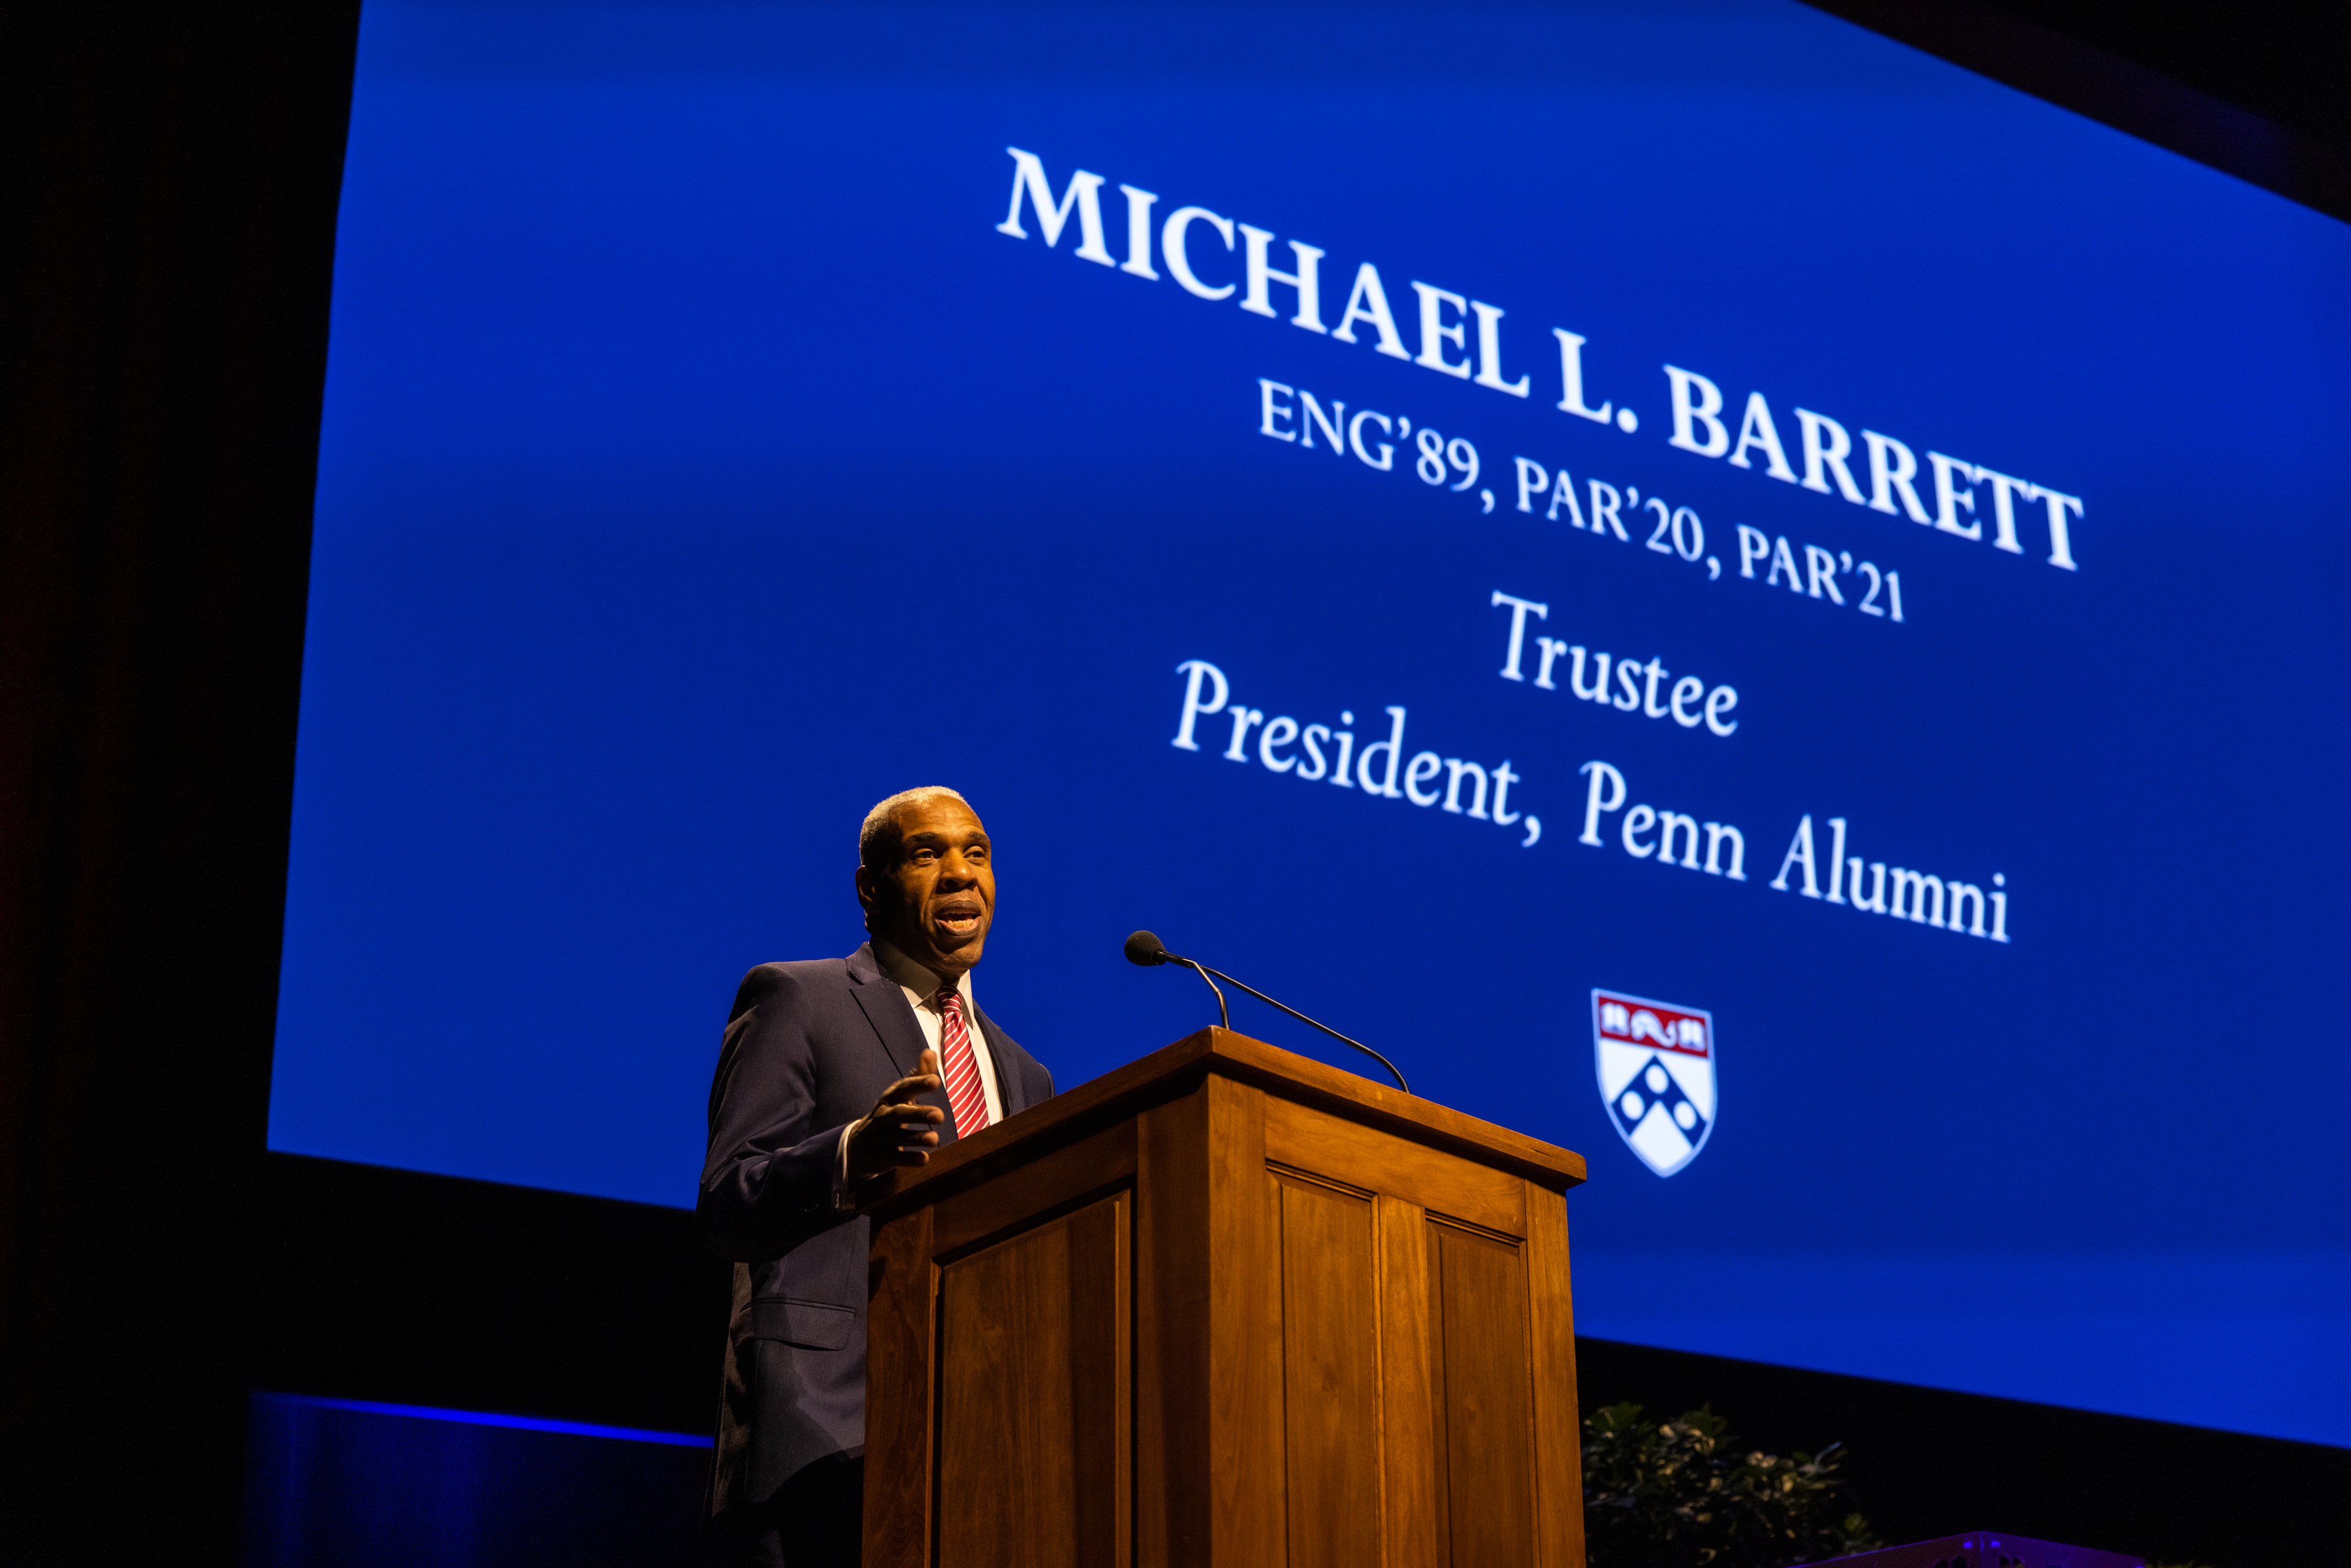 Michael Barrett speaking at a podium with the words Michael L. Barrett Eng’89, Par’20, Par’21, Trustee, President, Penn Alumni on a screen behind him. 